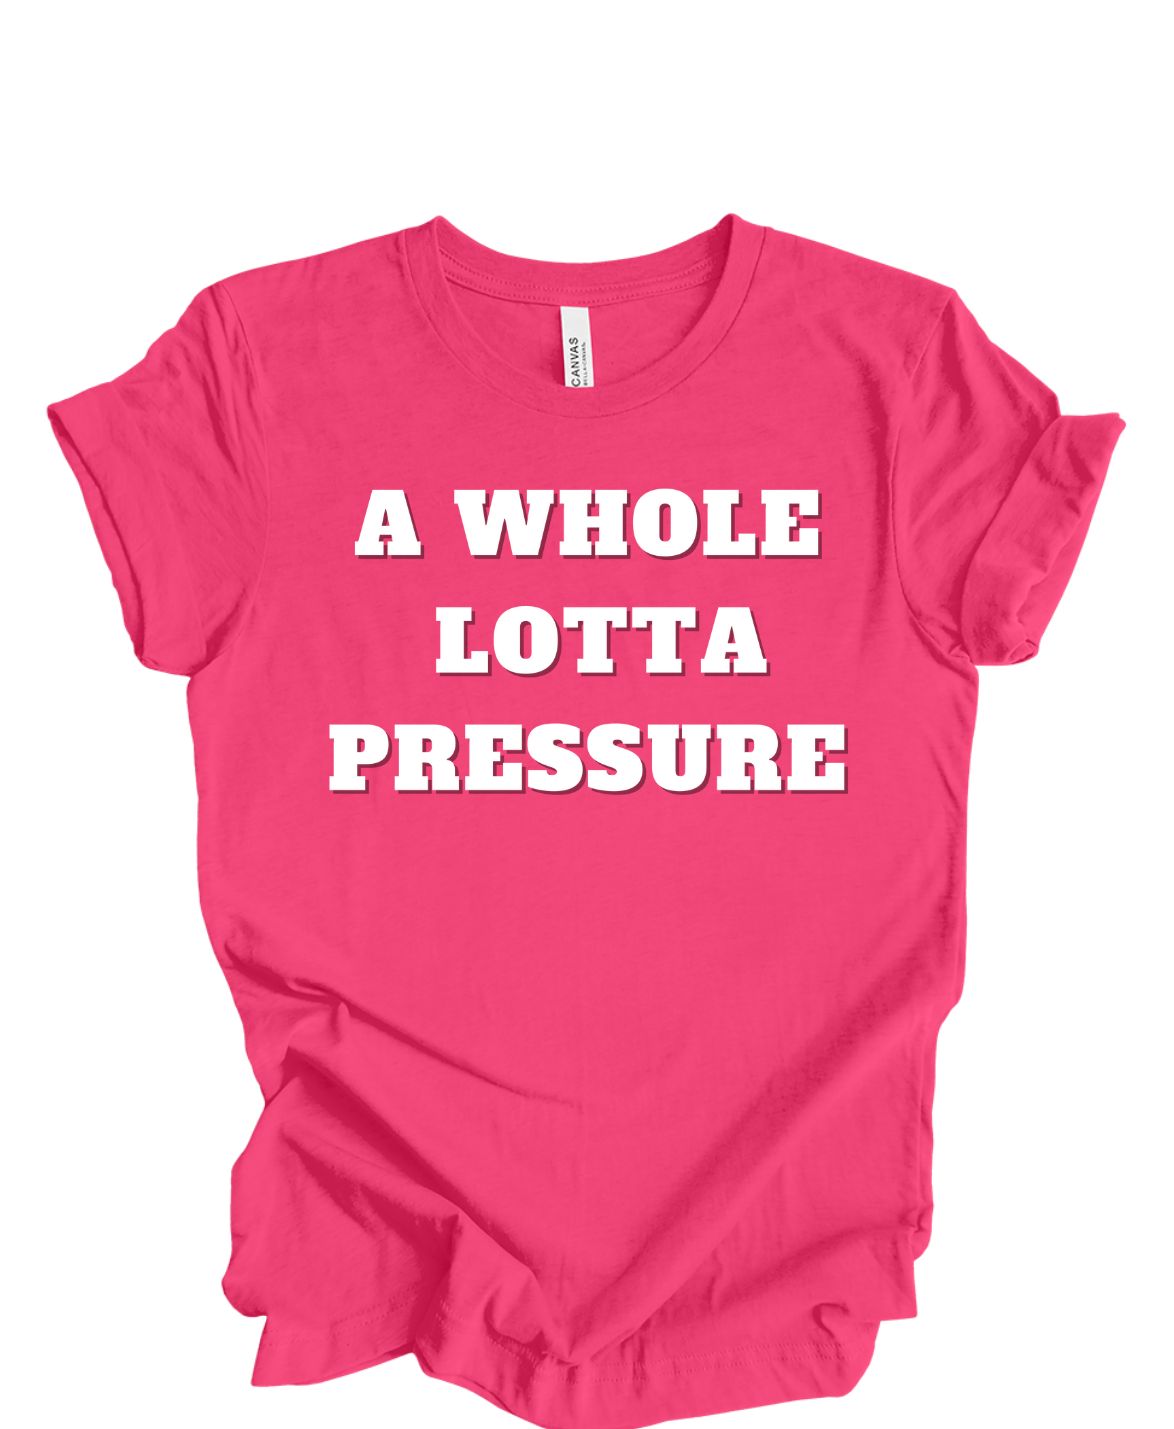 A Whole lotta Pressure T-shirt